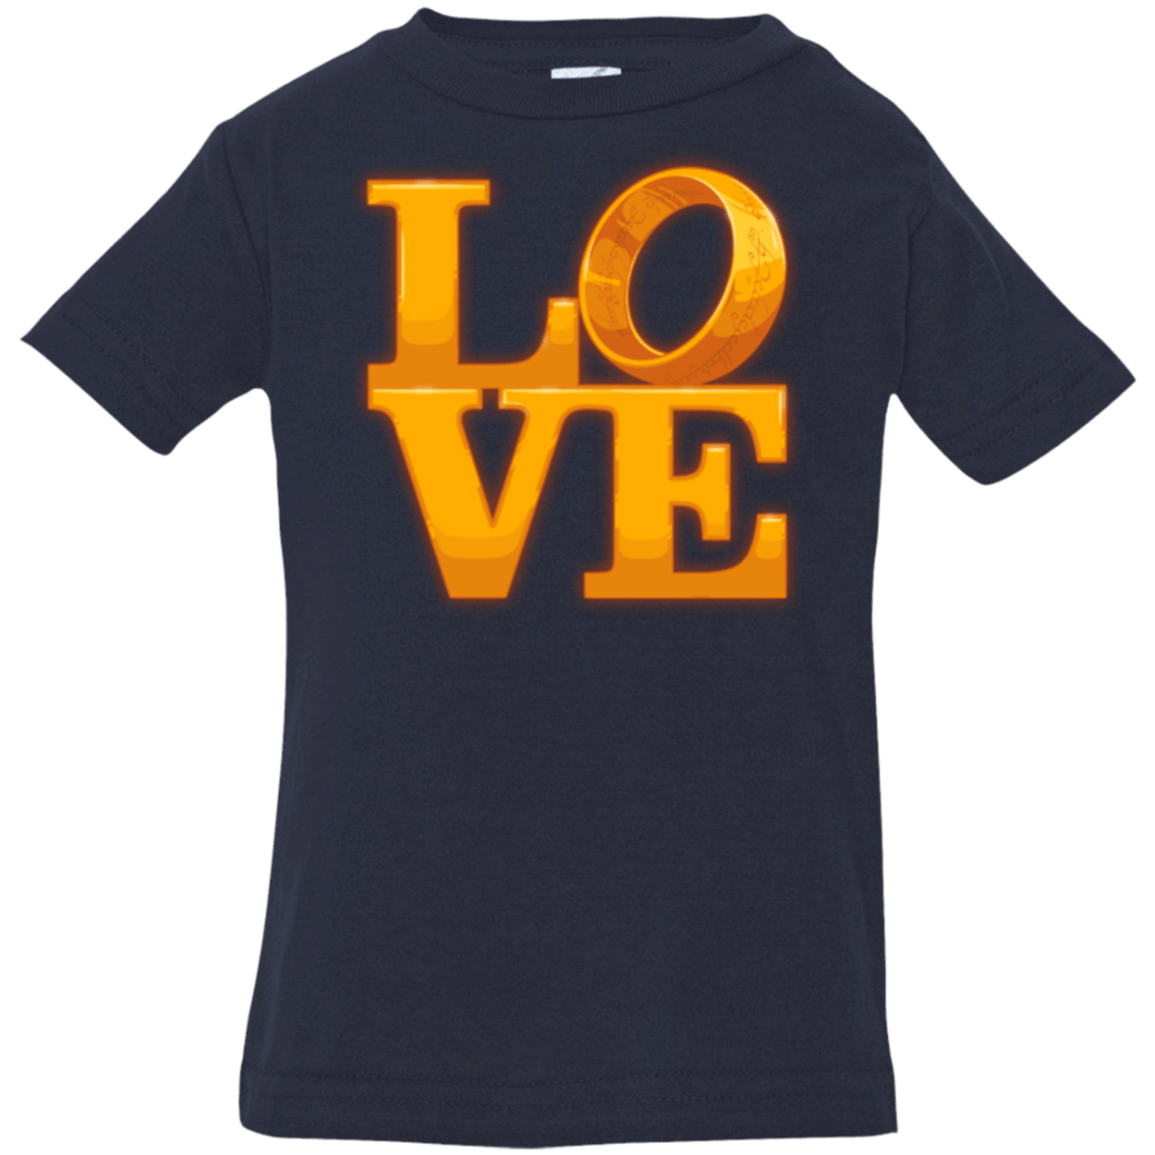 T-Shirts Navy / 6 Months LOVE Lotr Ring Infant PremiumT-Shirt